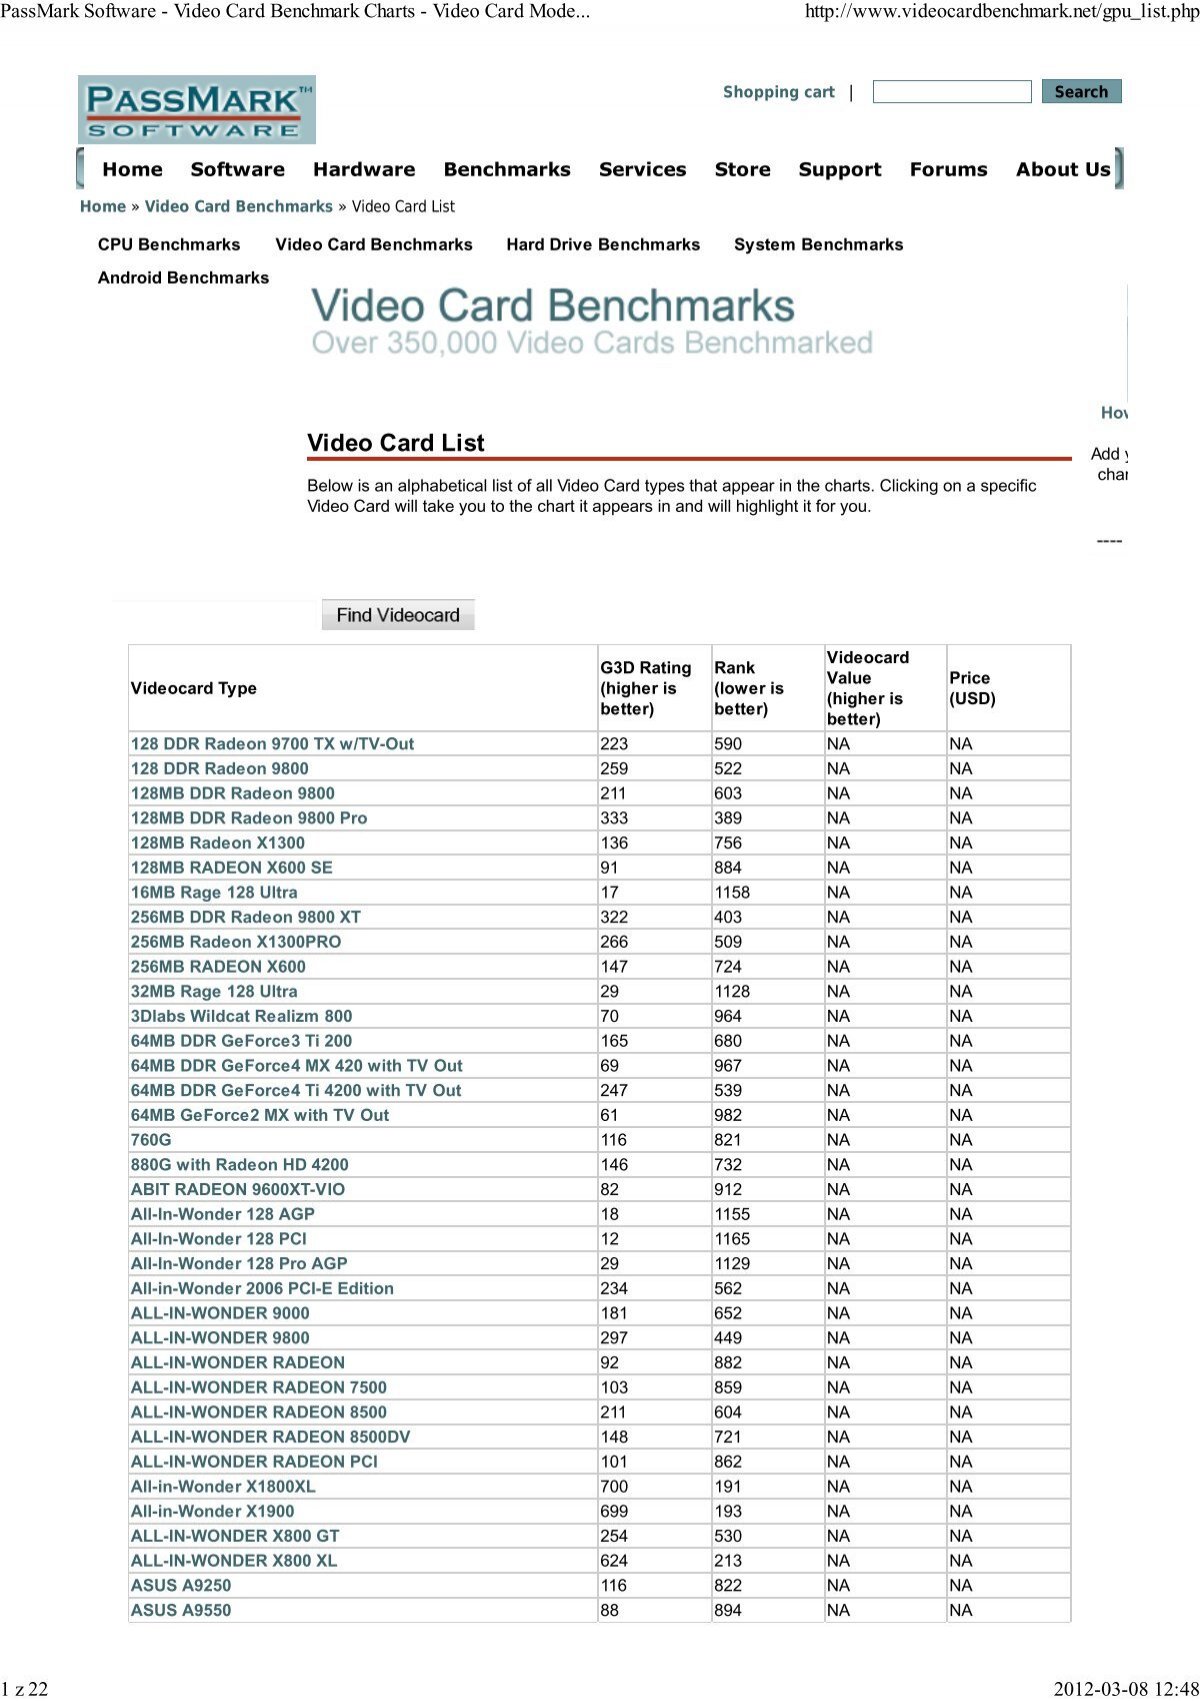 Video Card Benchmark Charts 